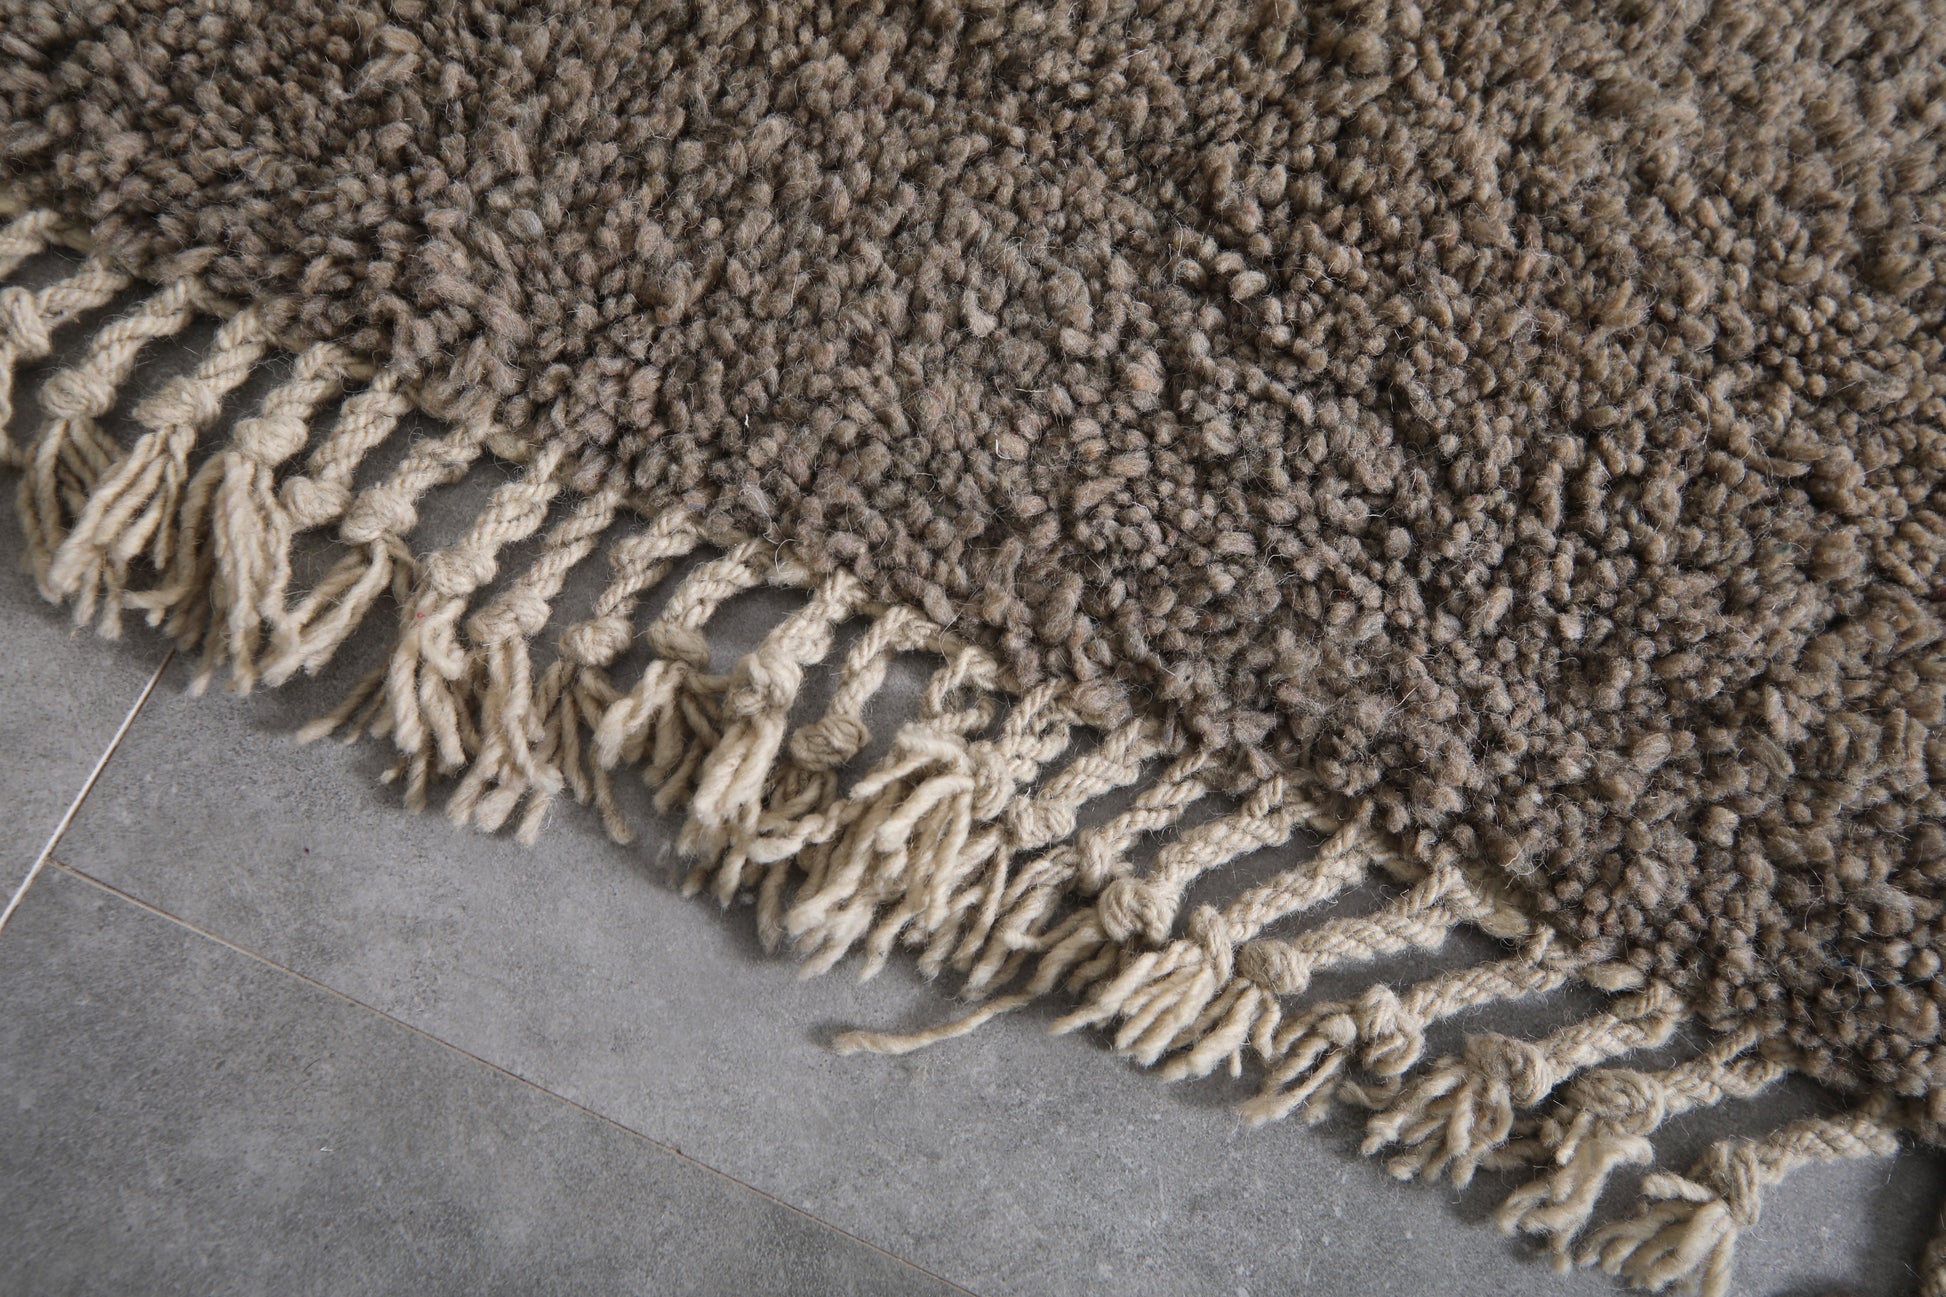 beni ourain rug 7.5 X 9.6 Feet - Beni ourain rugs